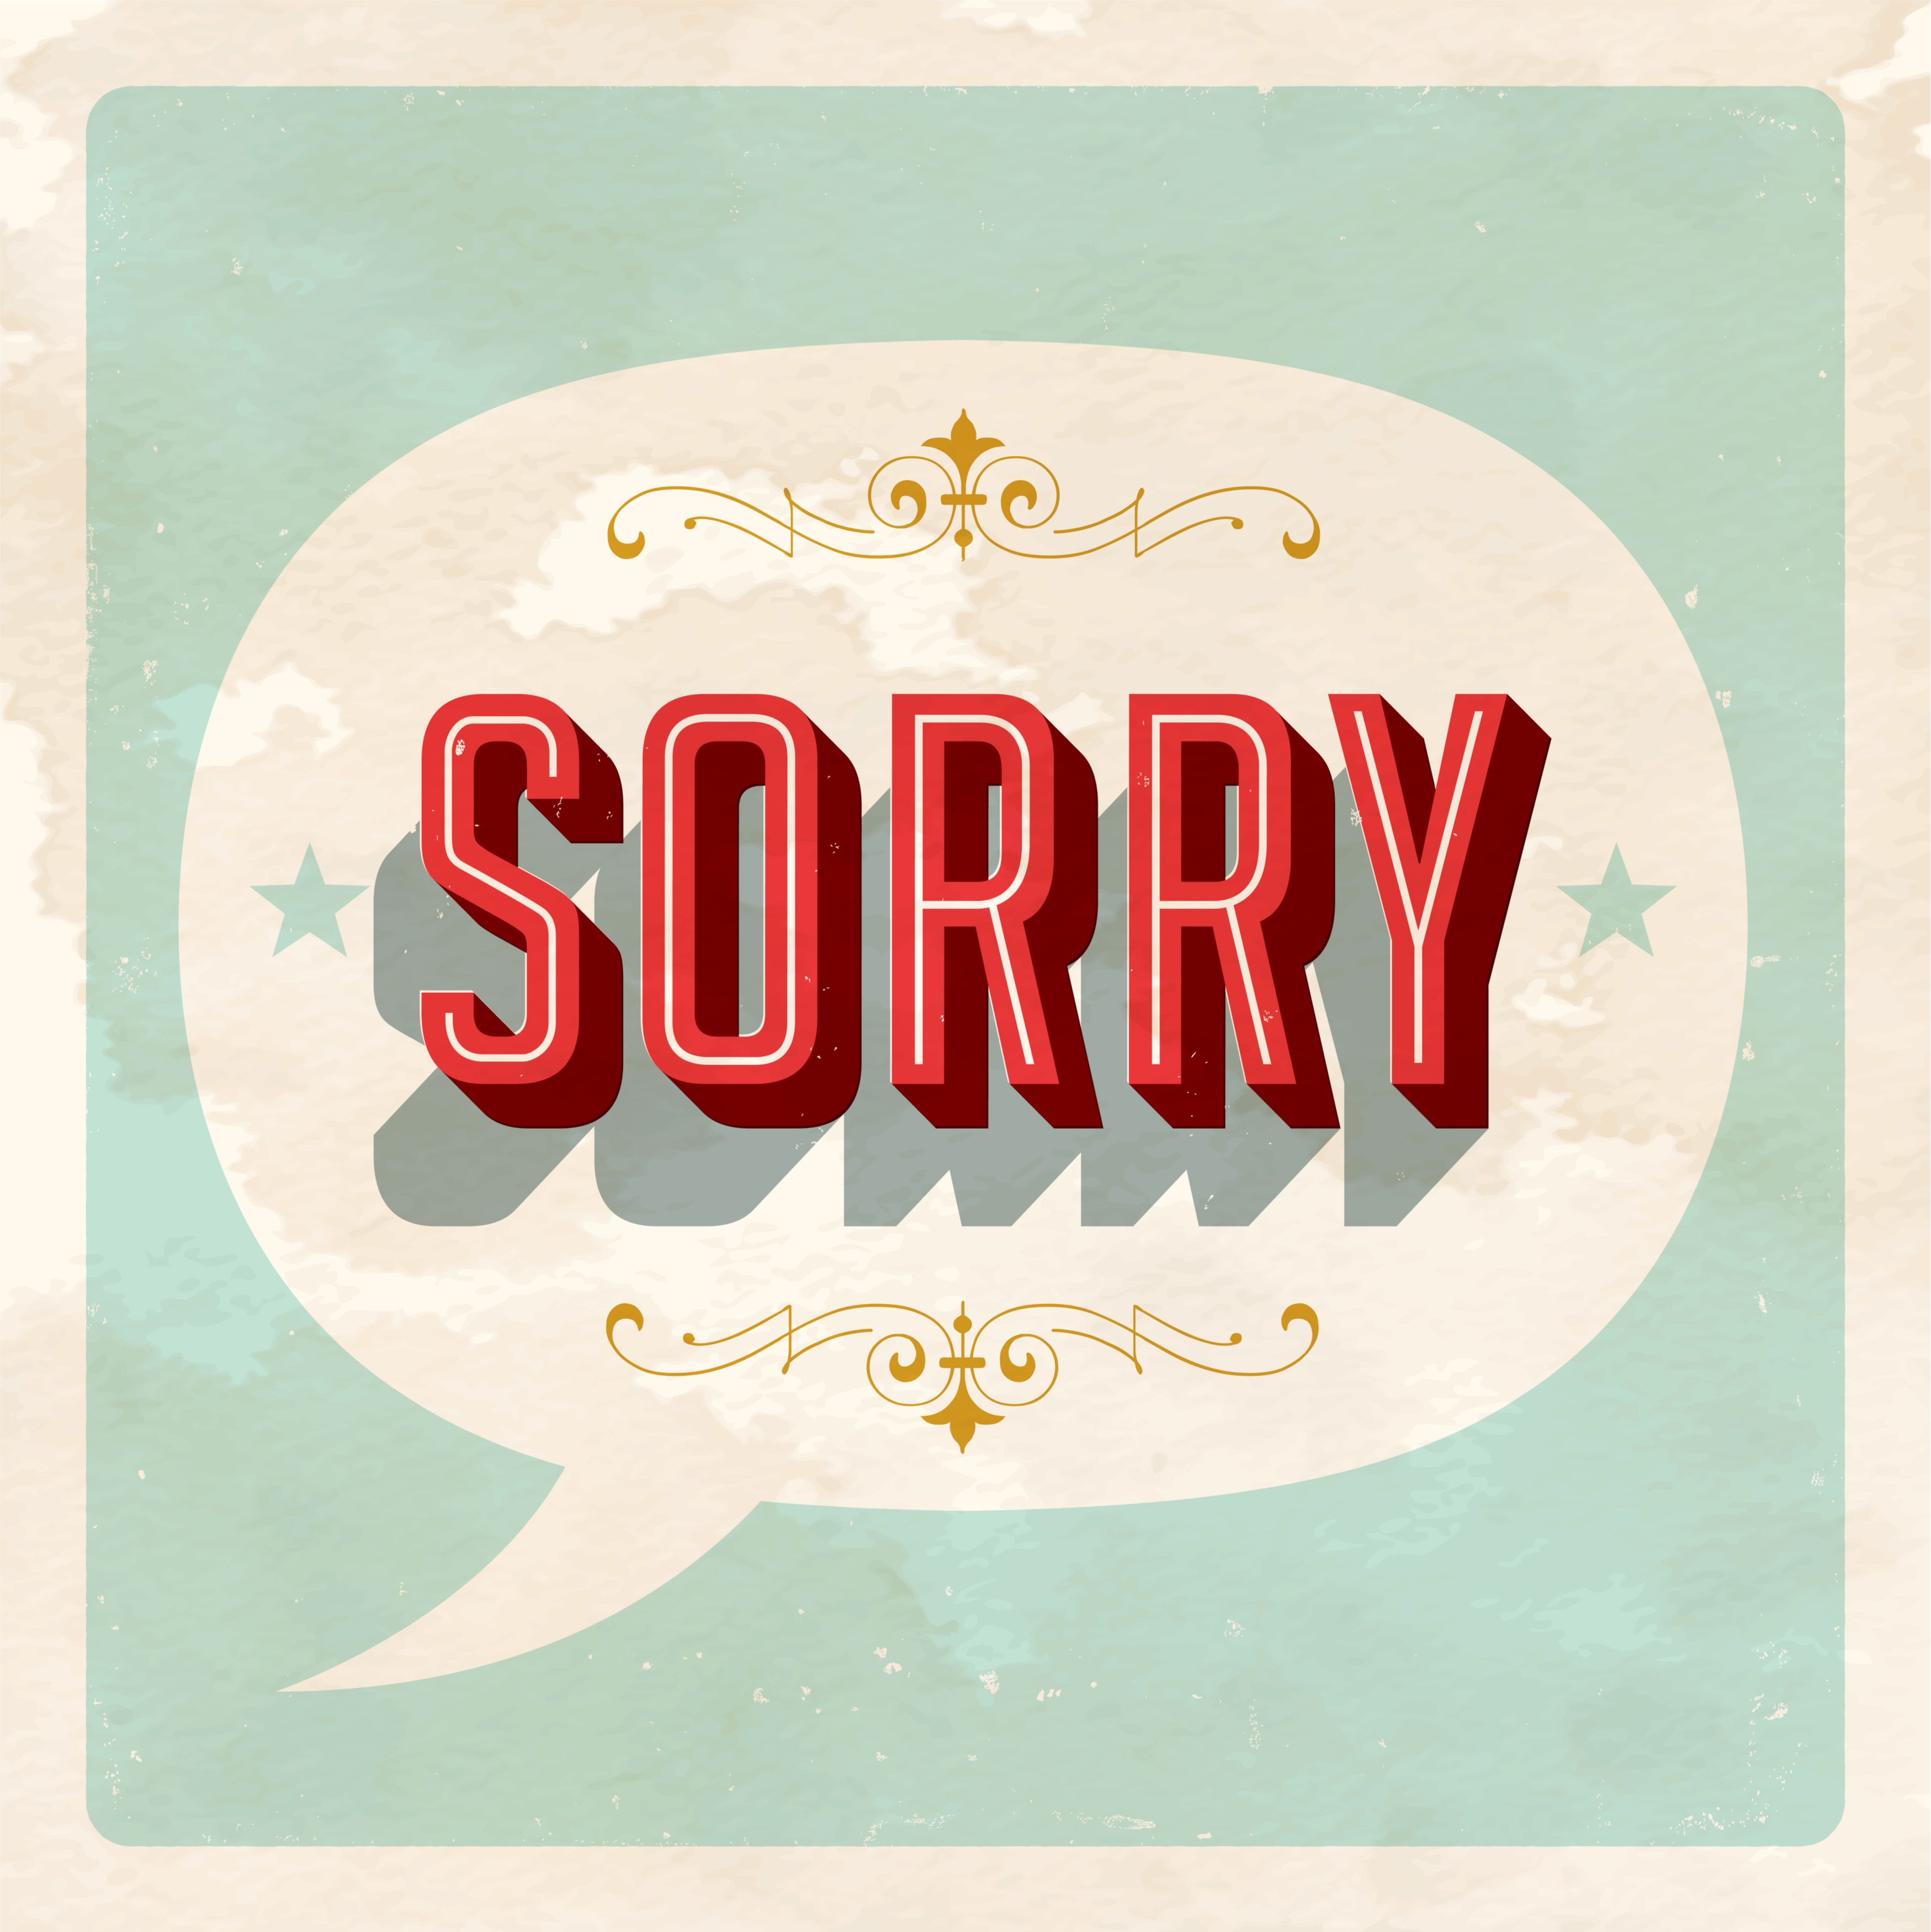 Social media apologies: 3 Rules